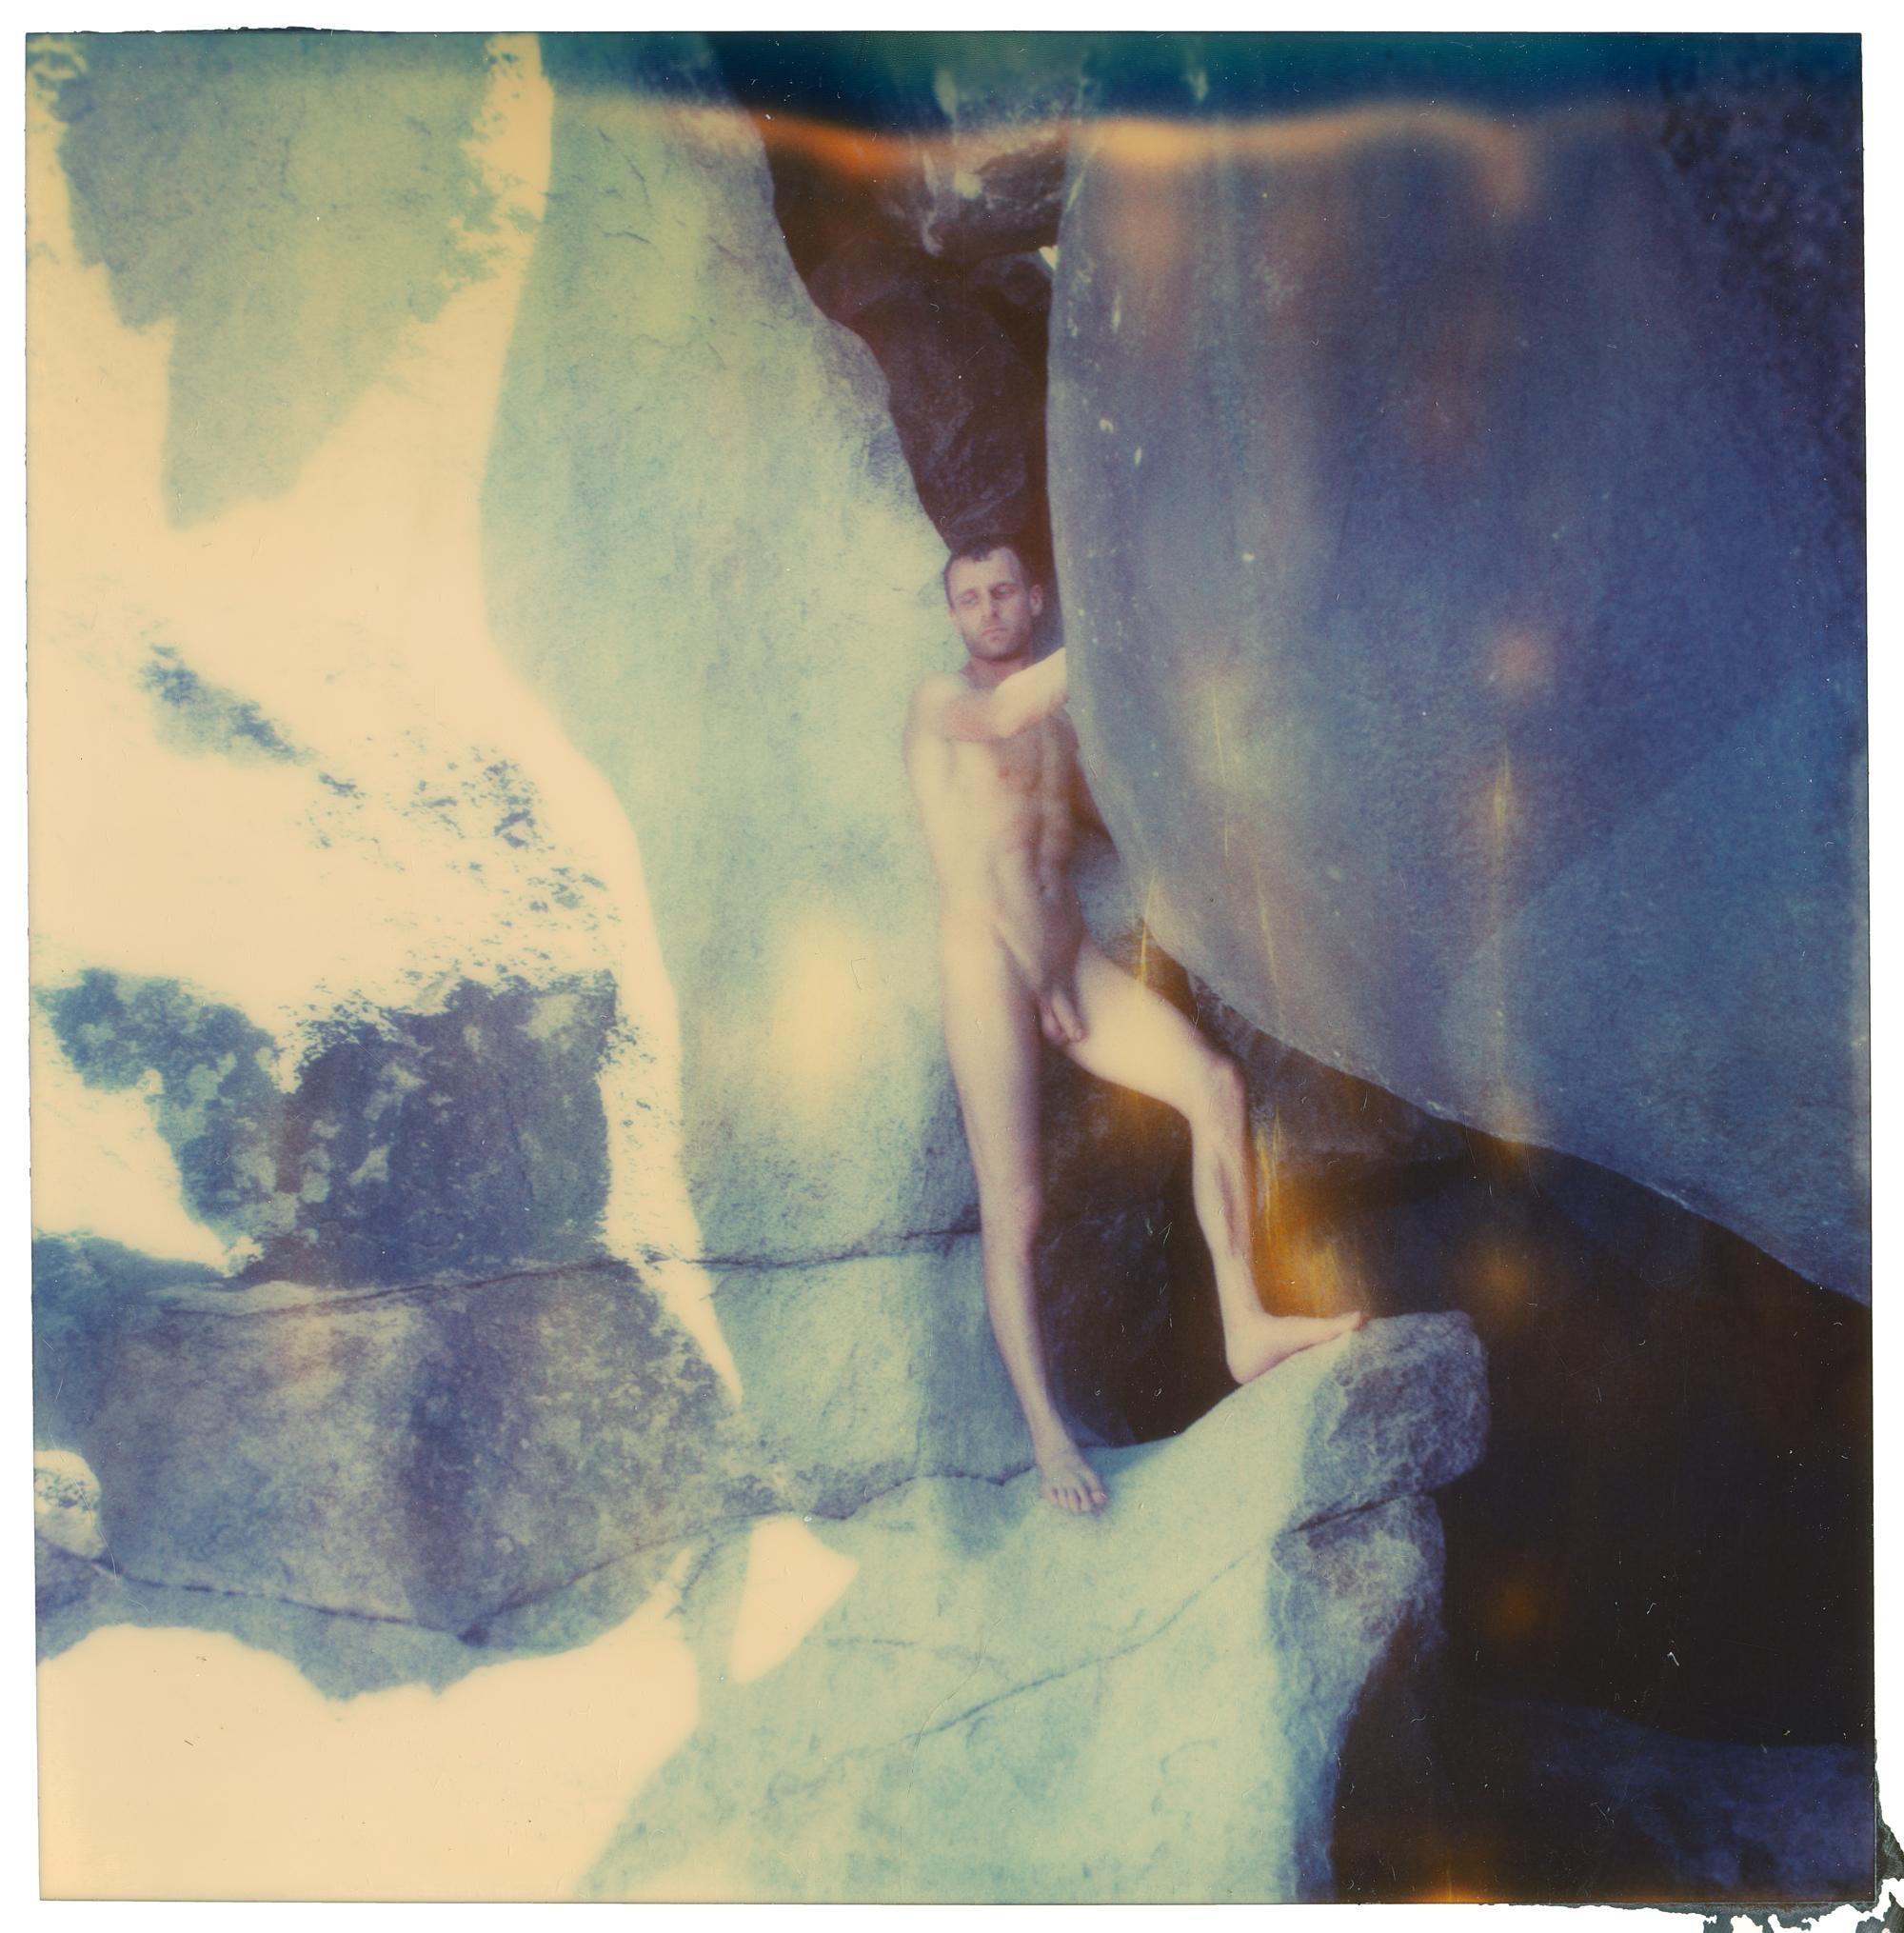 Stefanie Schneider Nude Photograph - Planet of the Apes X  - Polaroid, Color, Nude, Men, Contemporary 